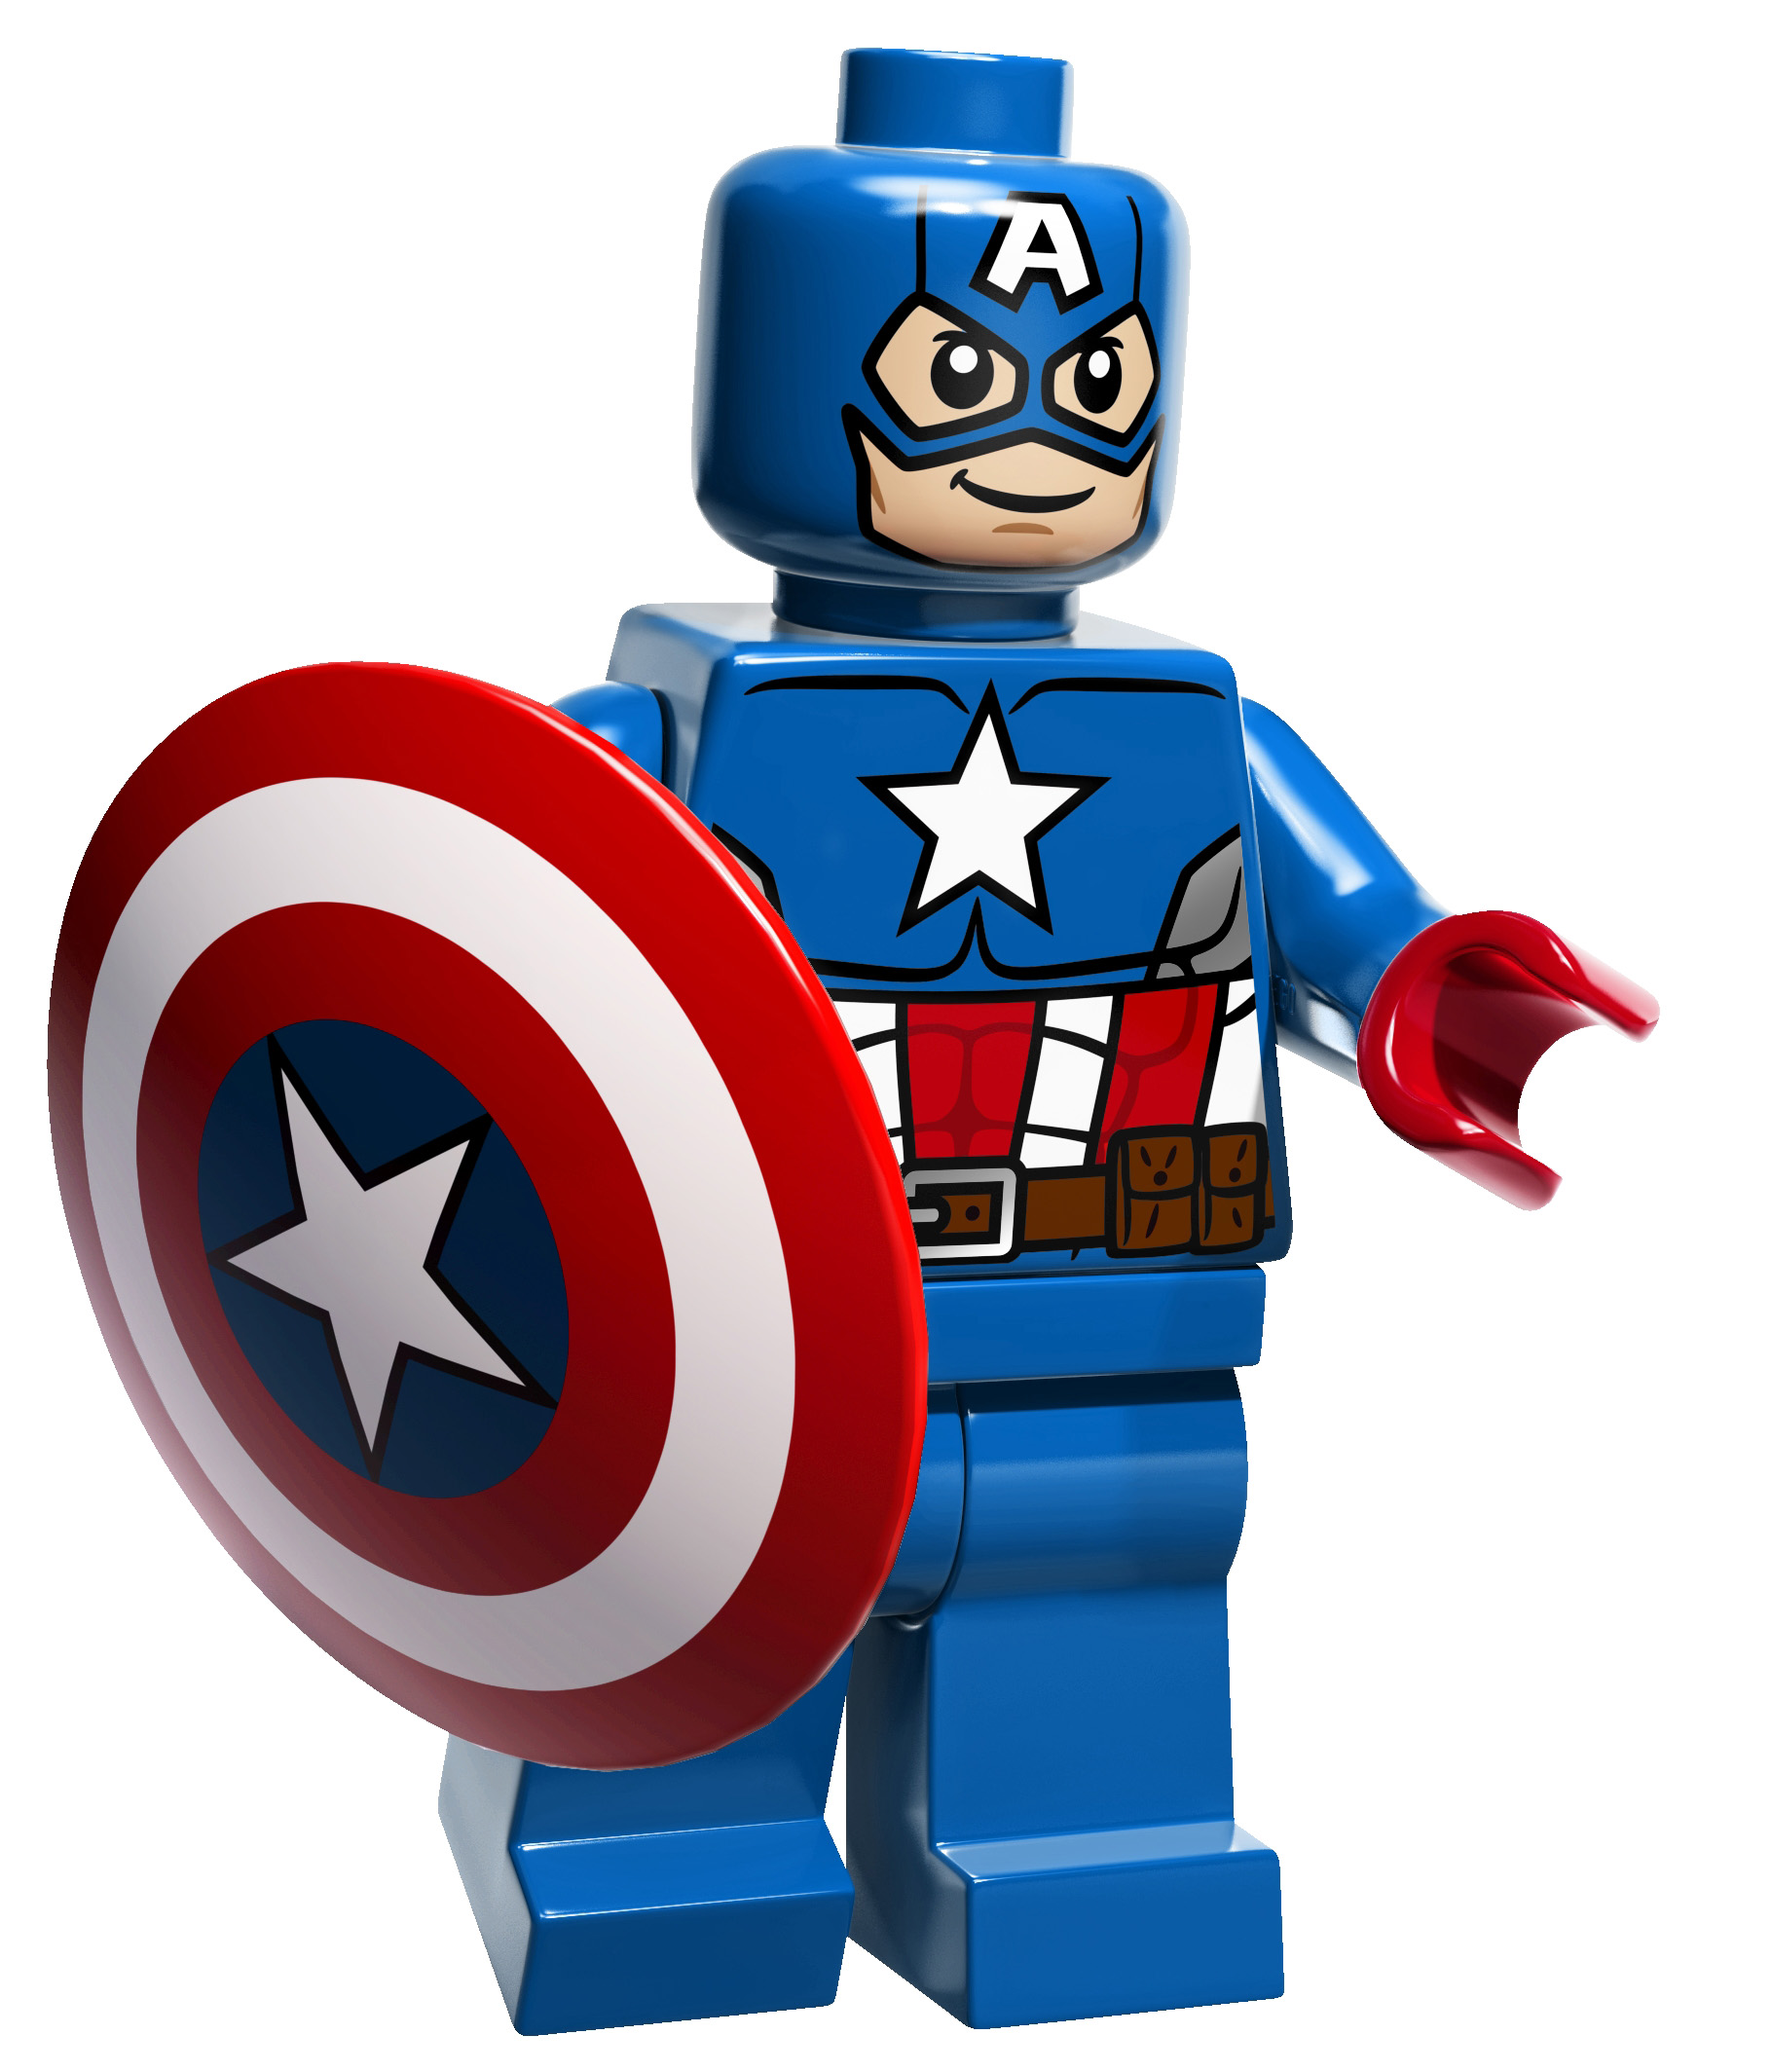 1820 x 2128 jpeg 445kB, Captain America – Captain America LEGO 